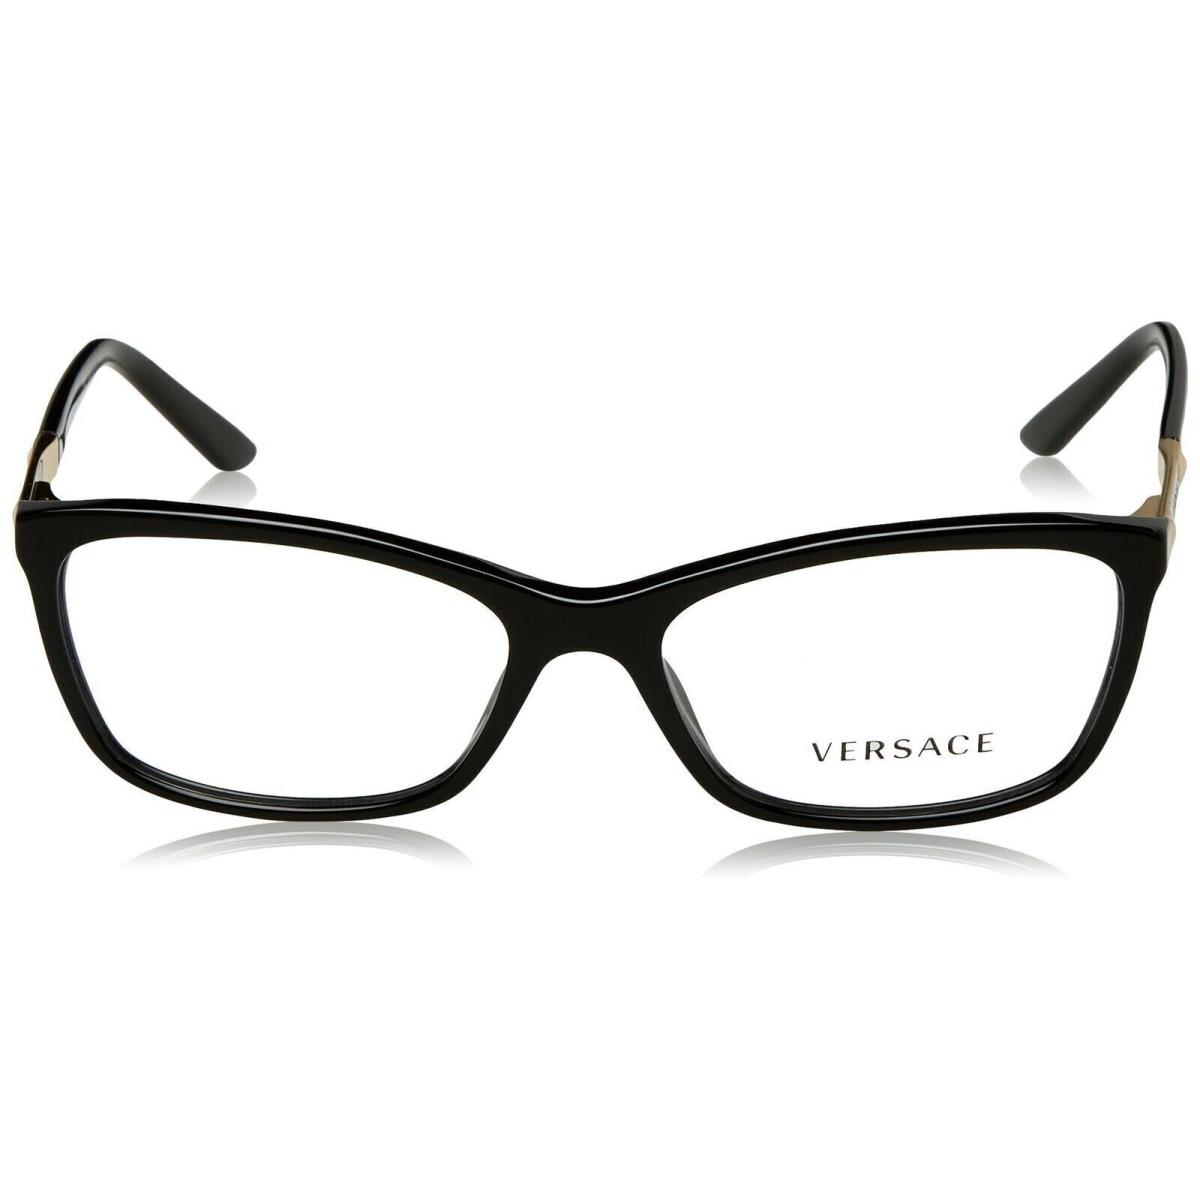 Versace Women VE3186 Black Eyeglasses Frames GB1 54mm